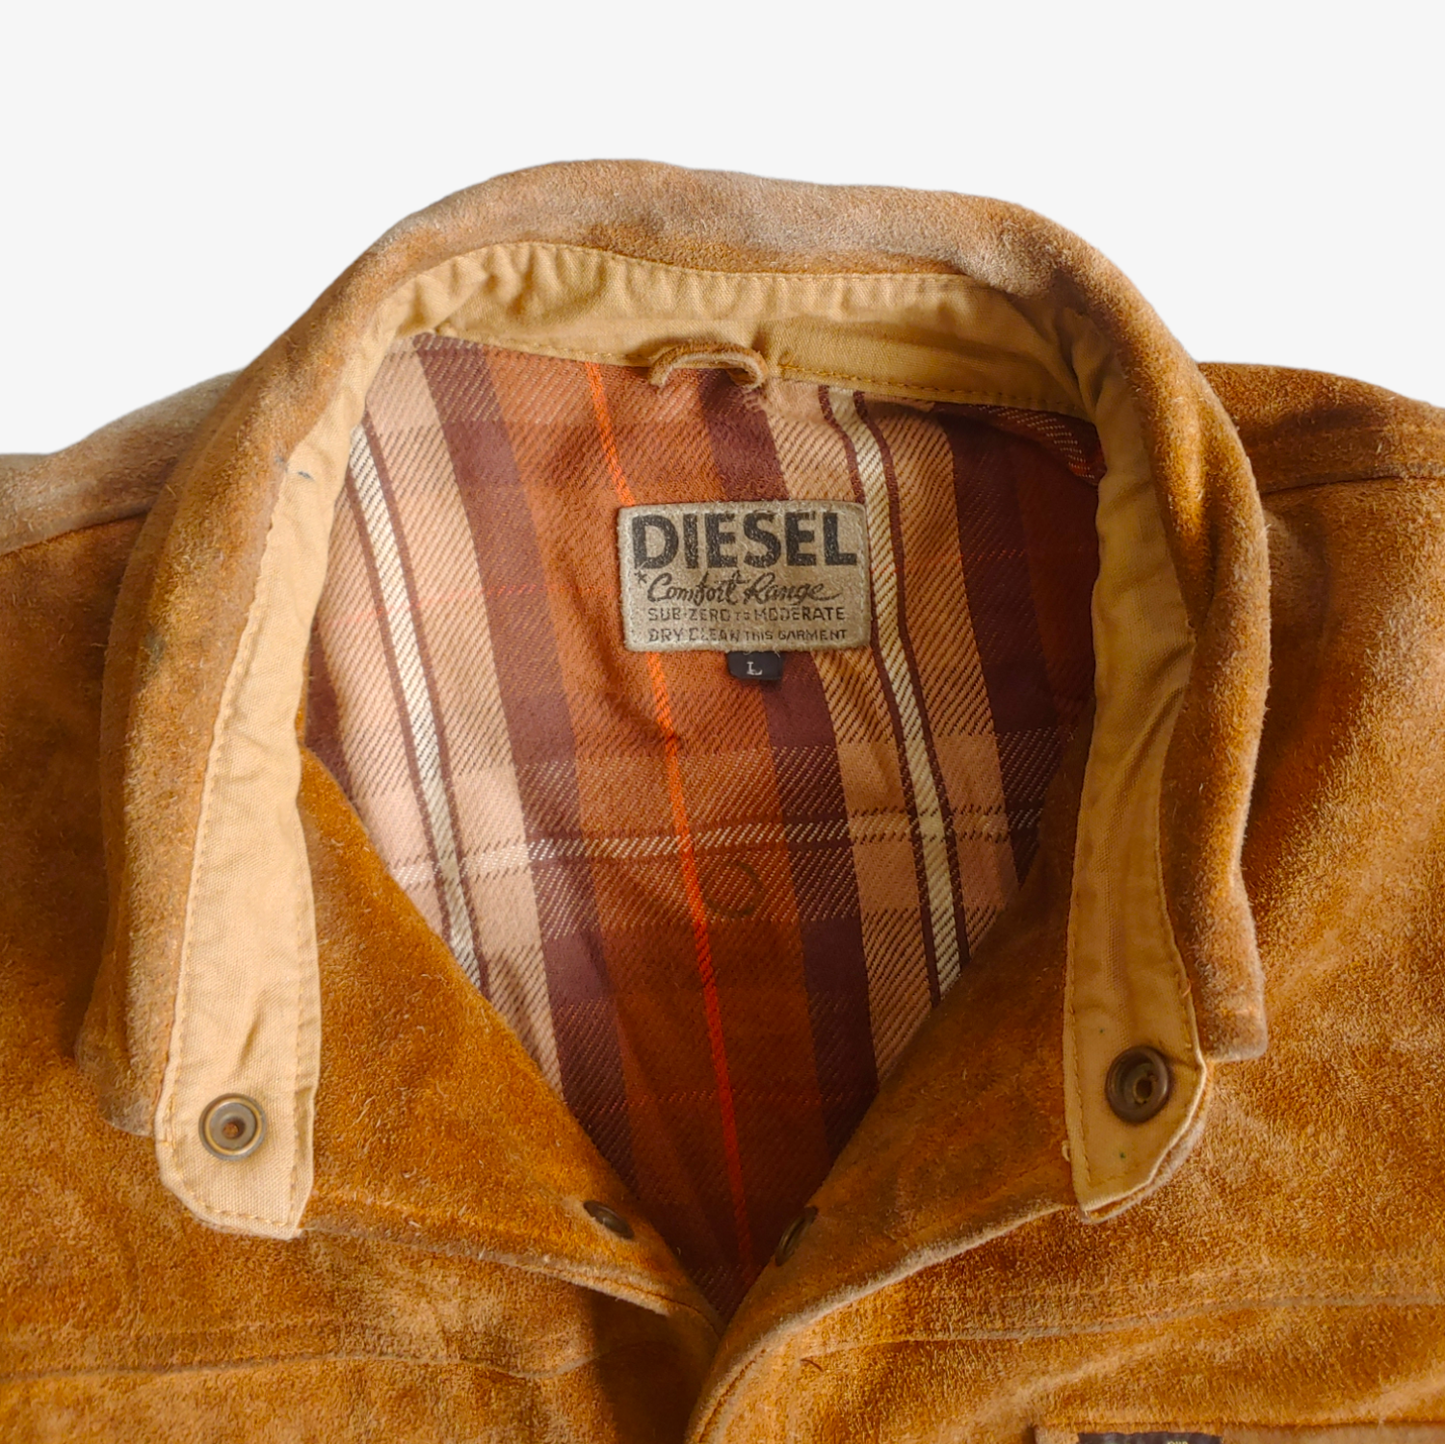 Vintage 1980s Diesel Comfort Range Brown Suede Leather Shirt Jacket Shacket Label - Casspios Dream